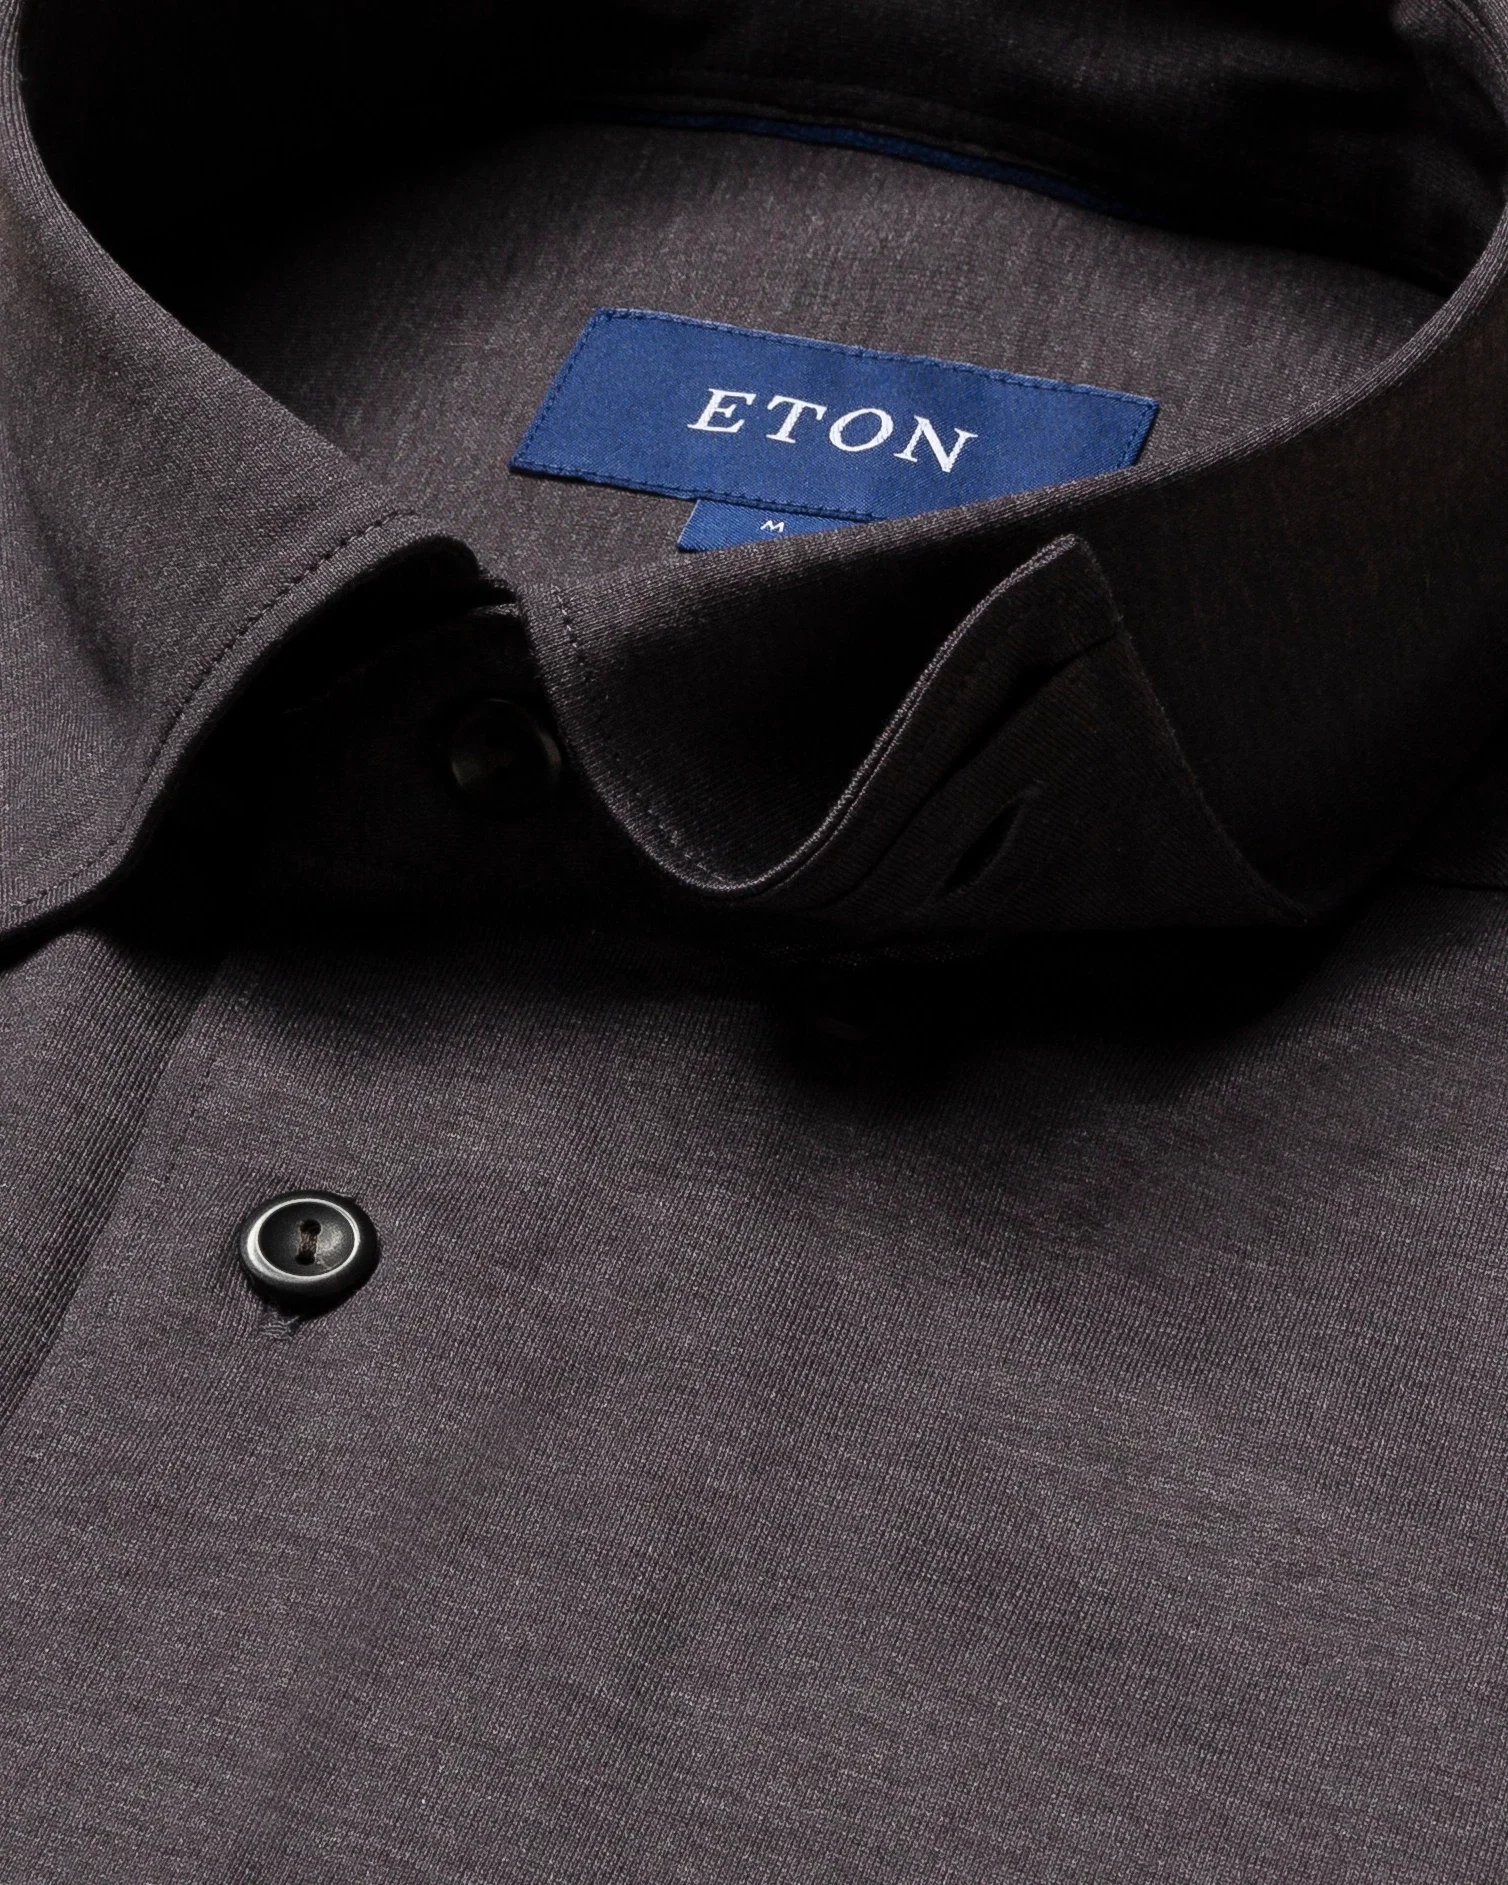 Eton - browngrey jersey shirt tone in tone buttons